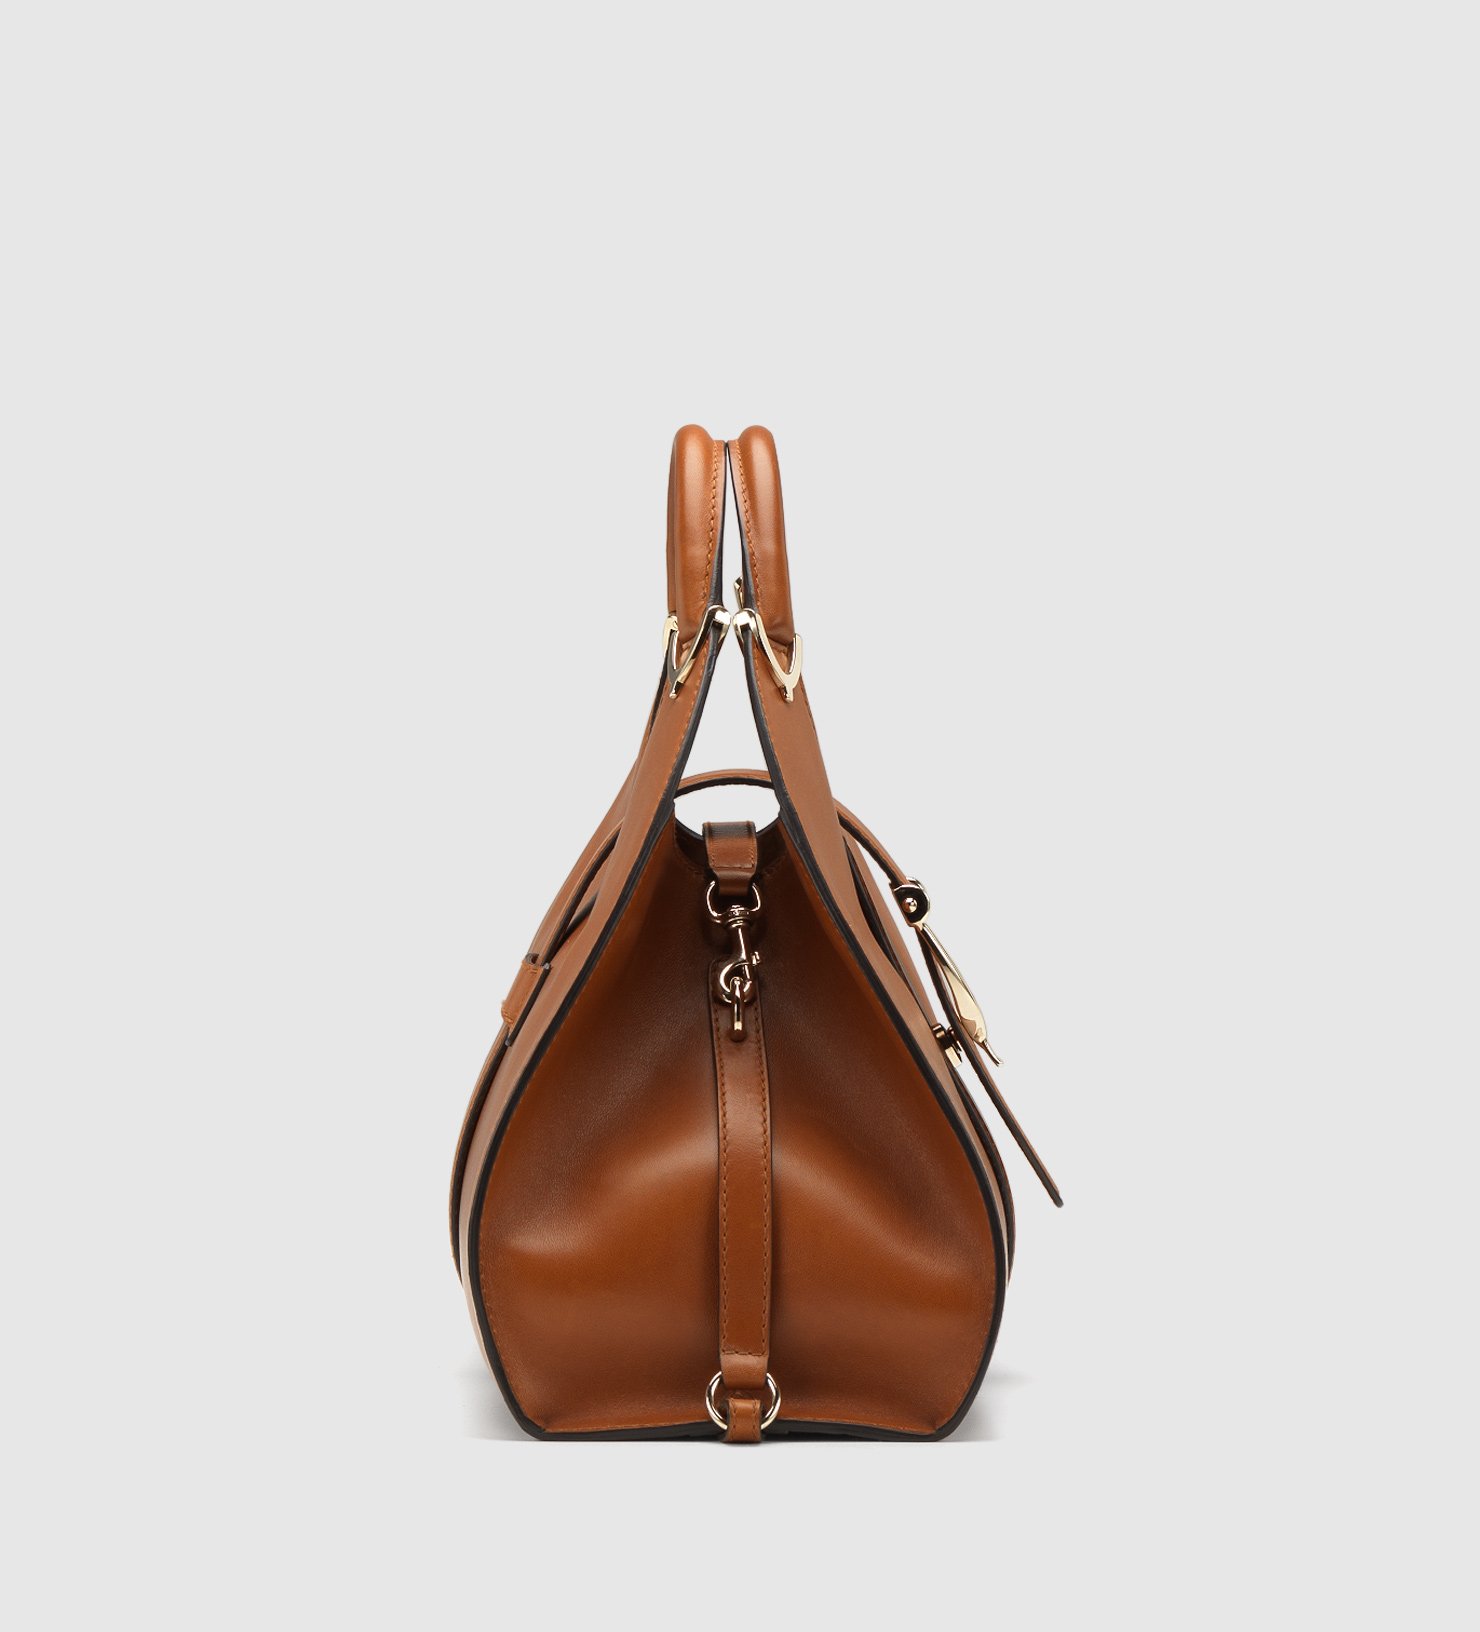 Gucci Stirrup Leather Shoulder Bag in Brown - Lyst